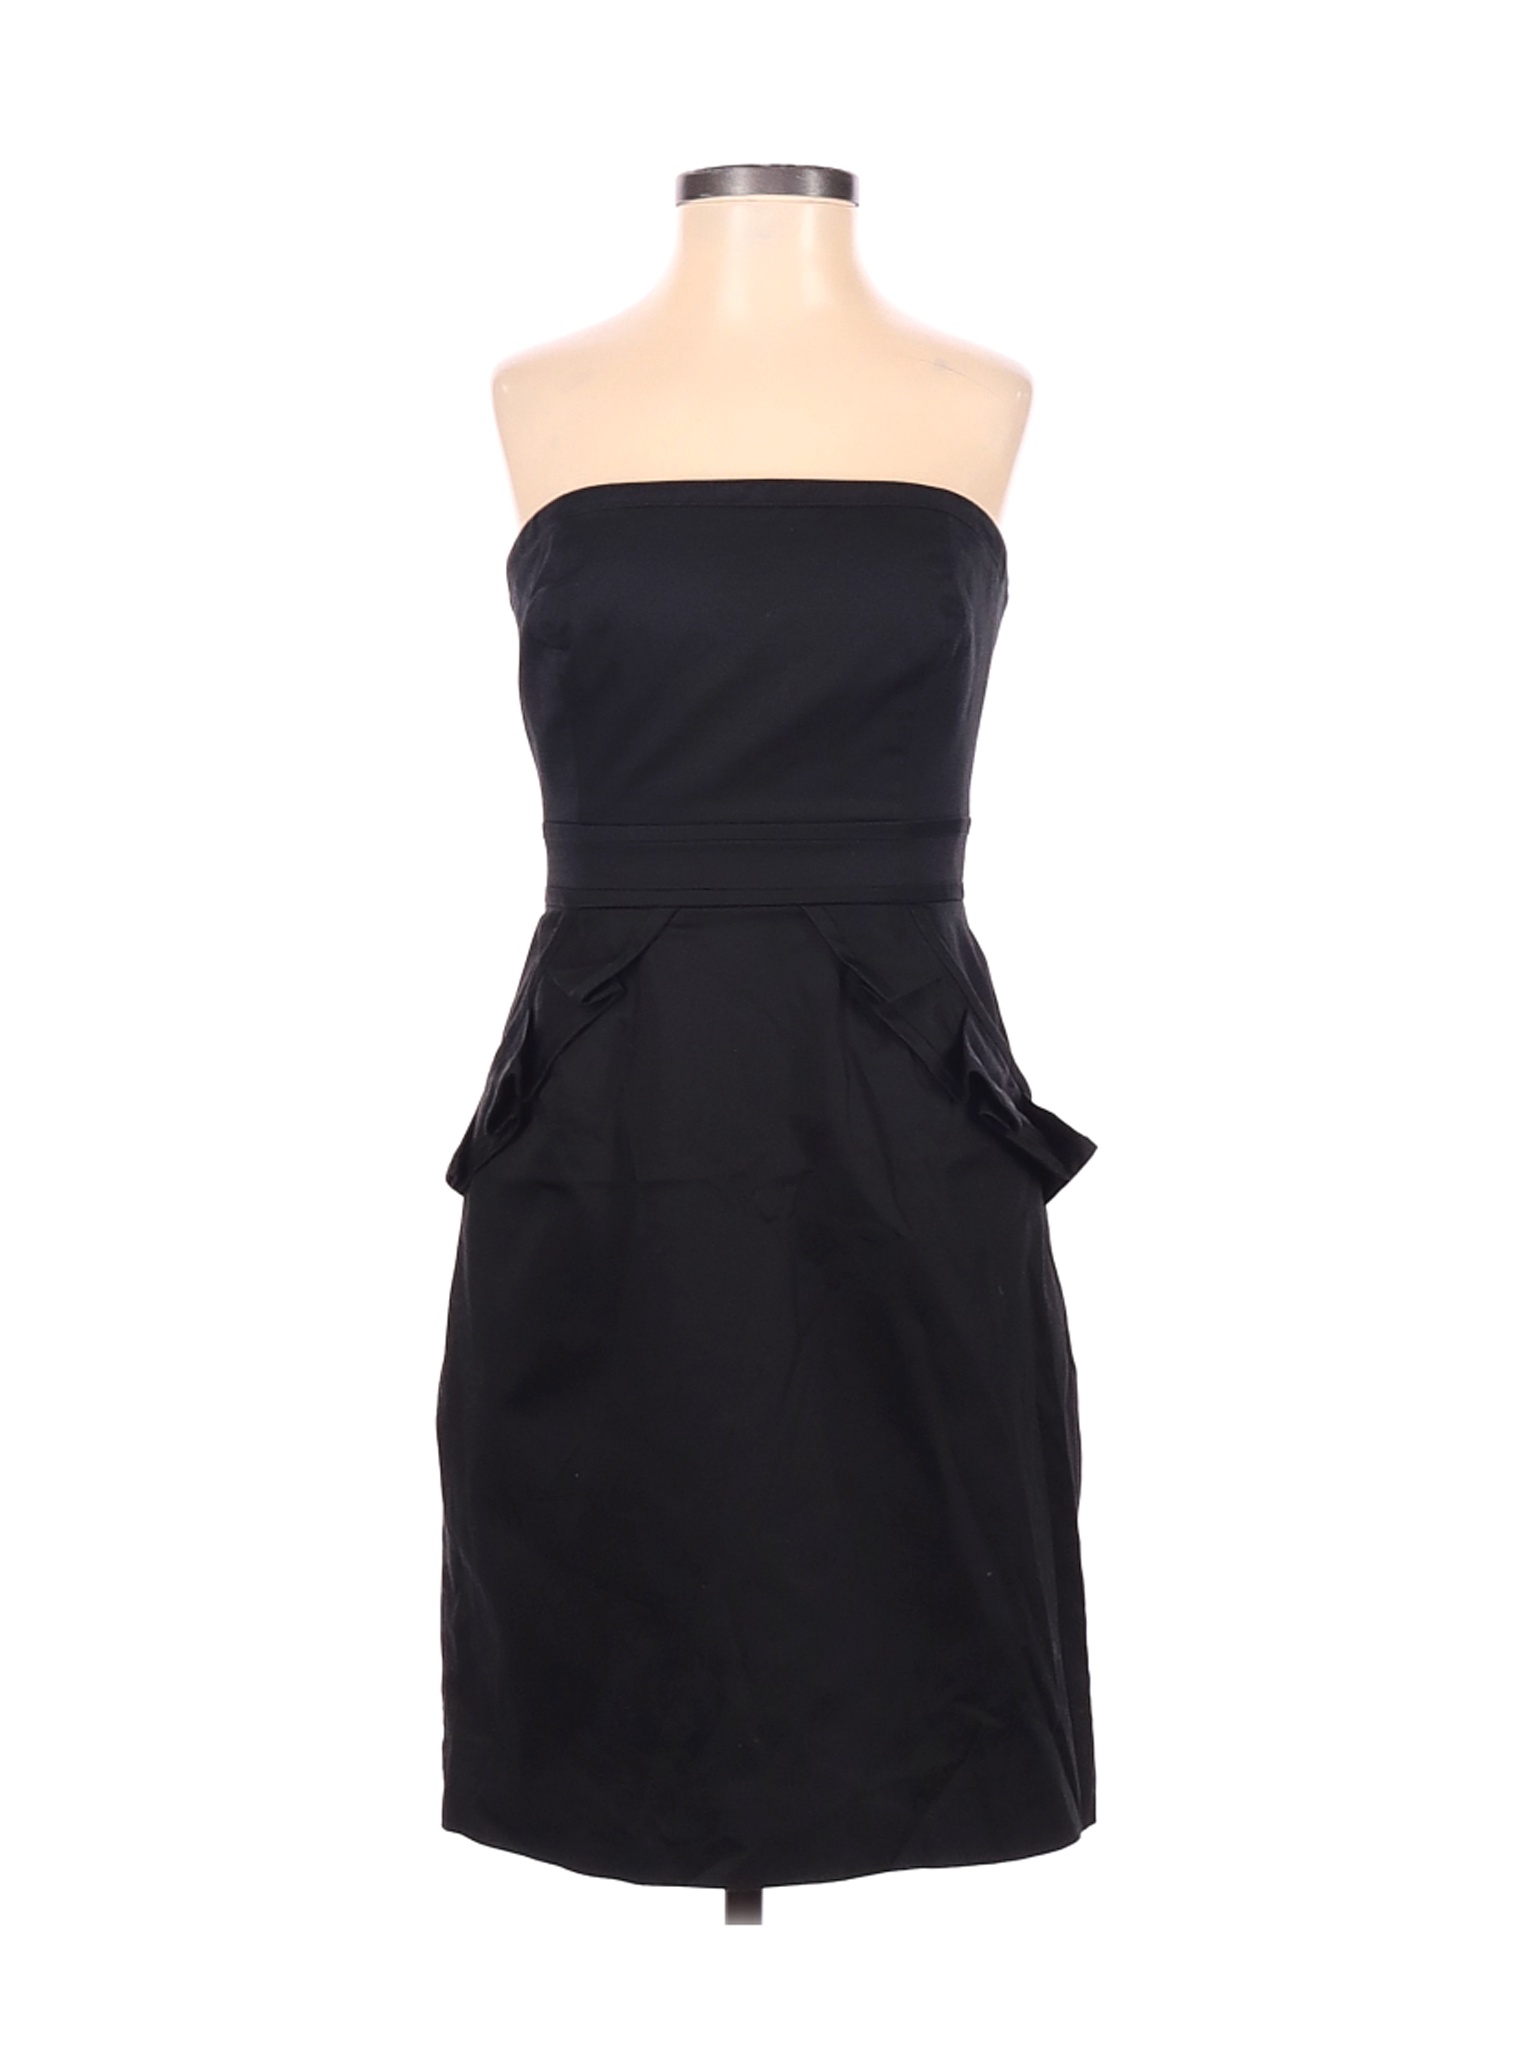 J.Crew Women Black Cocktail Dress 0 | eBay